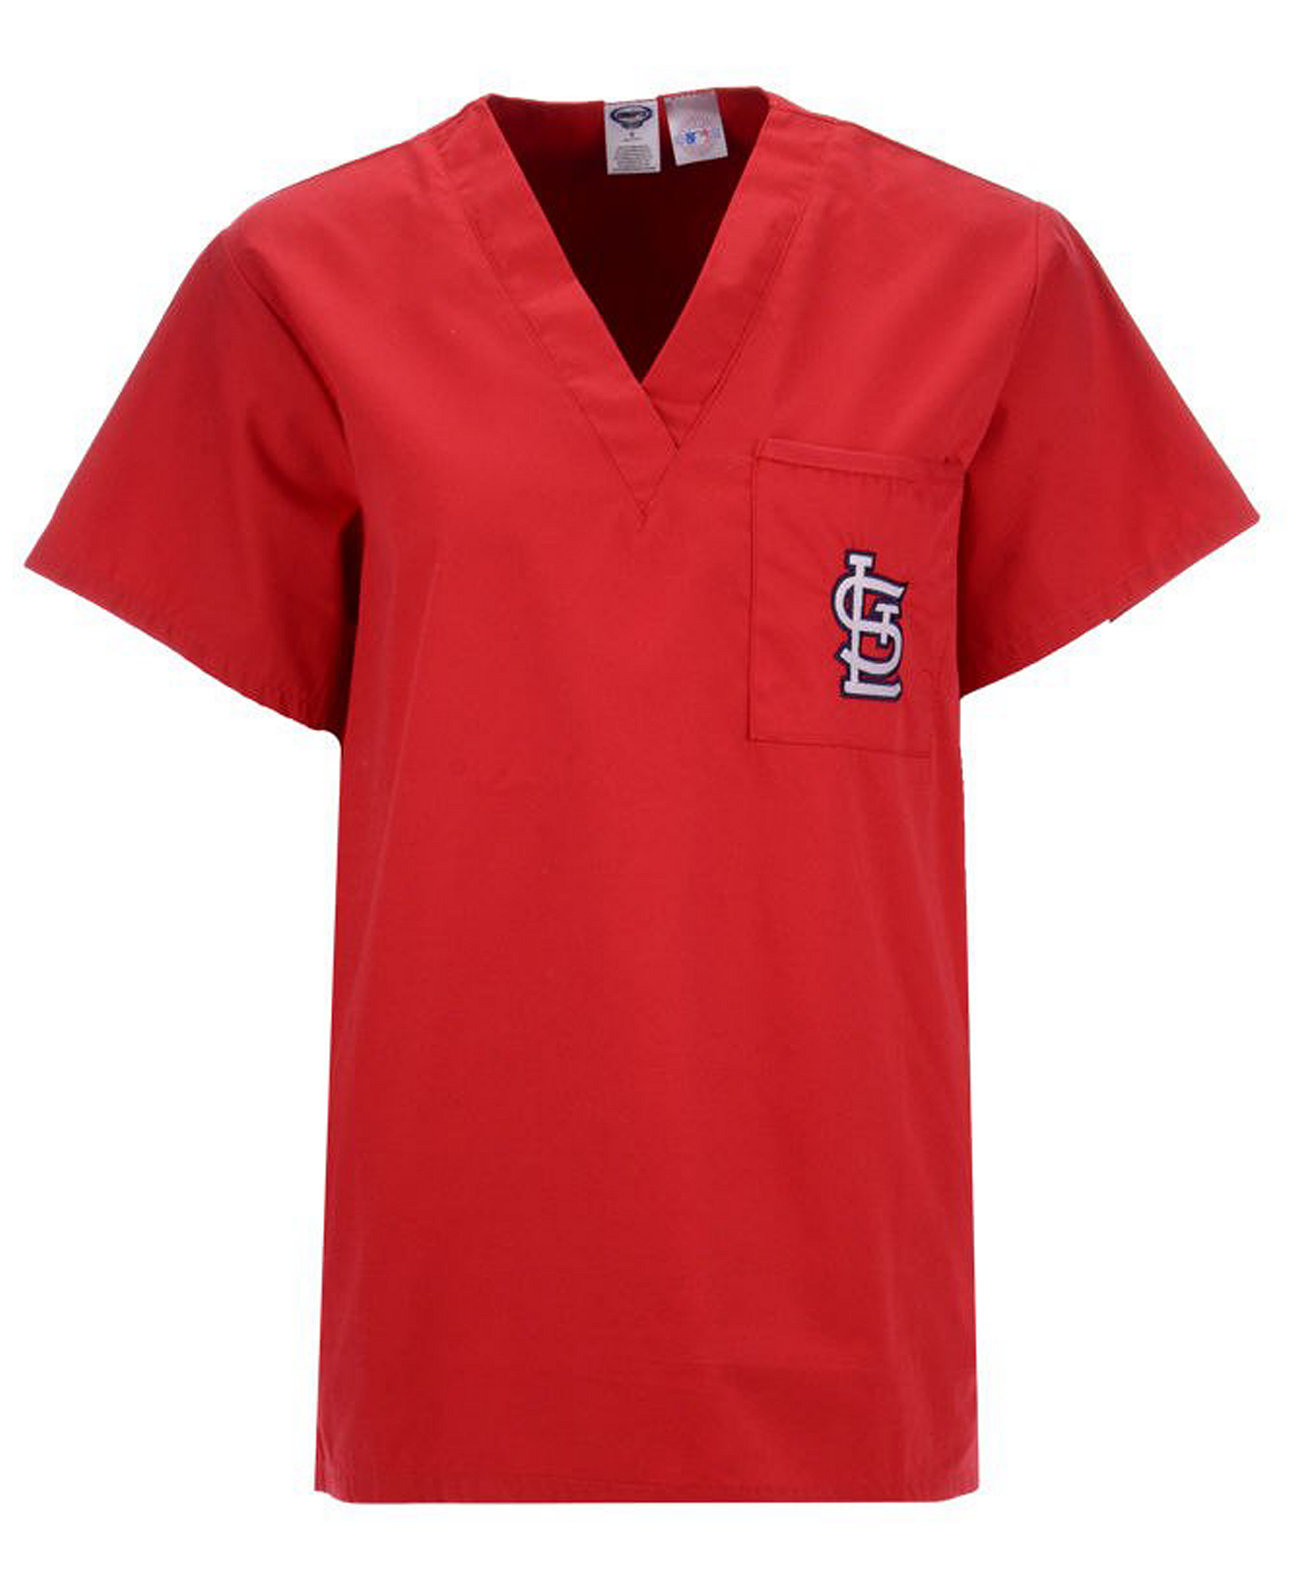 Мужская футболка с надписью "St. Louis Cardinals" Concepts Sport